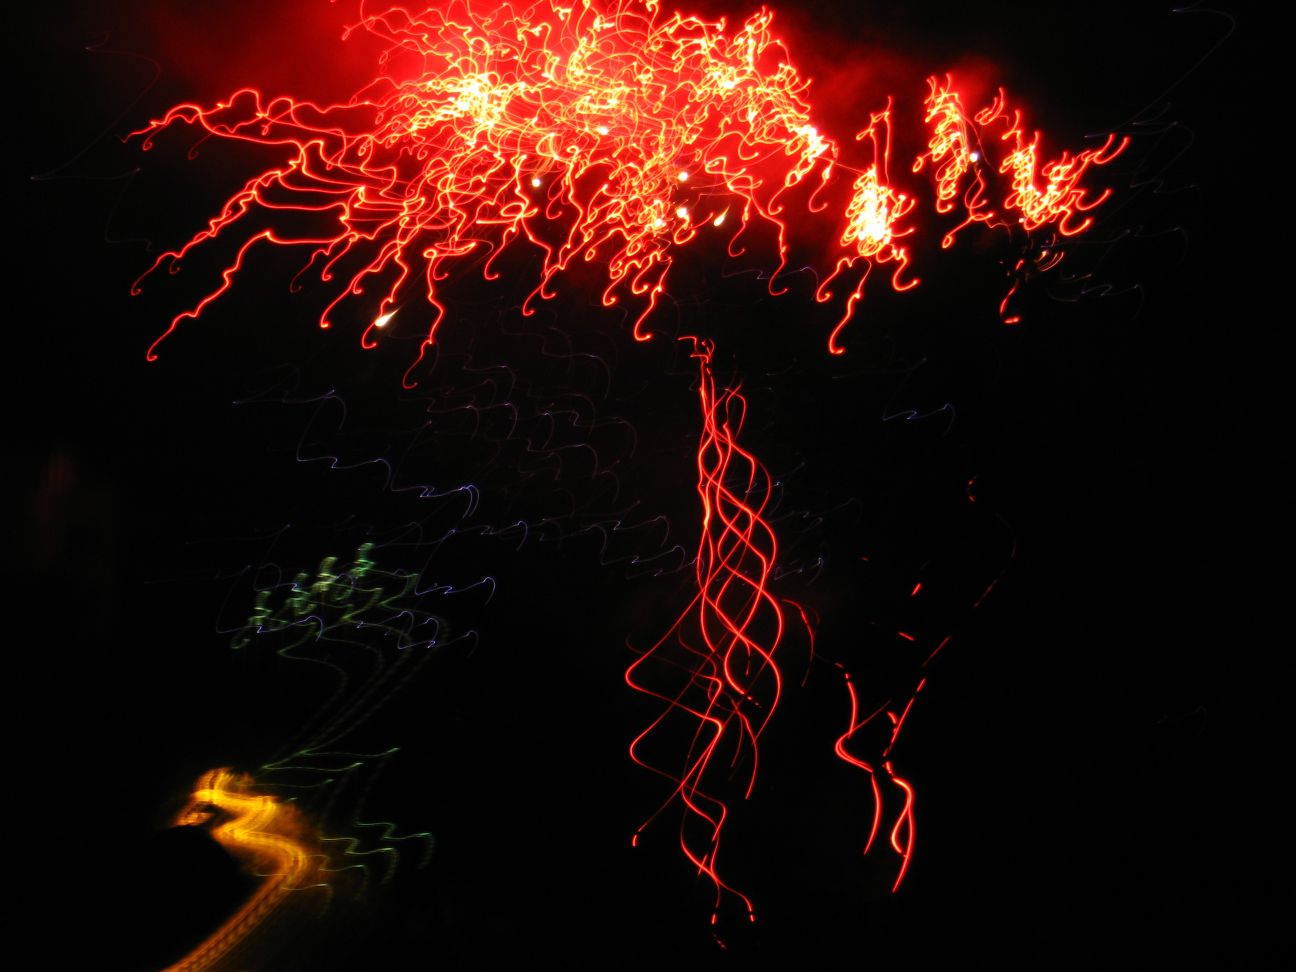 [fireworks+1.jpg]